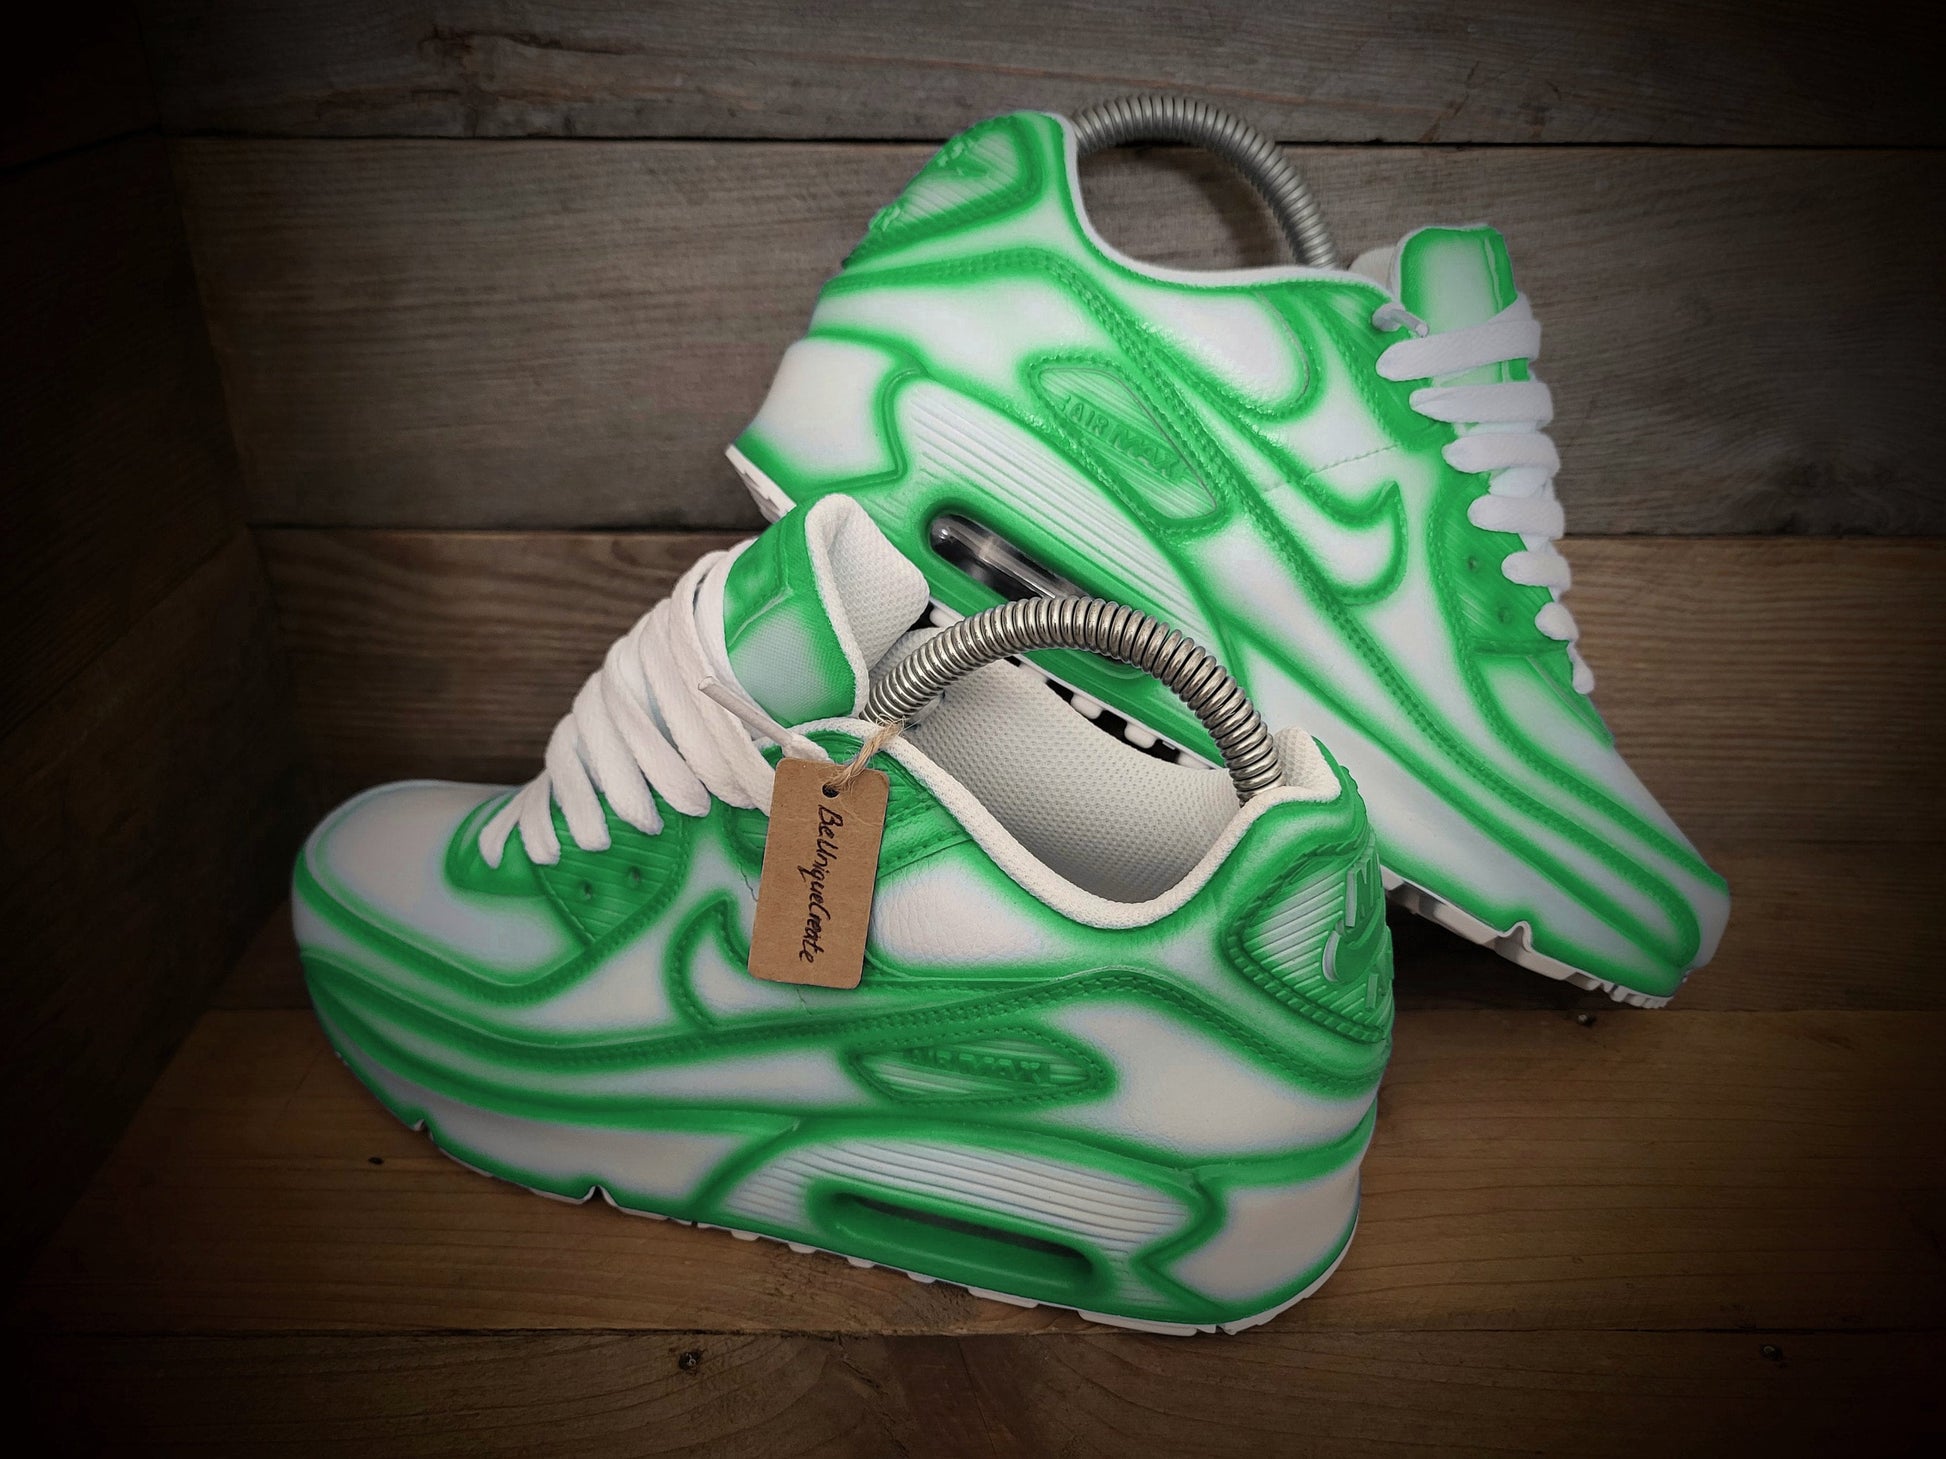 Custom Painted Air Max 90/Sneakers/Shoes/Kicks/Premium/Personalised/Green Cartoon